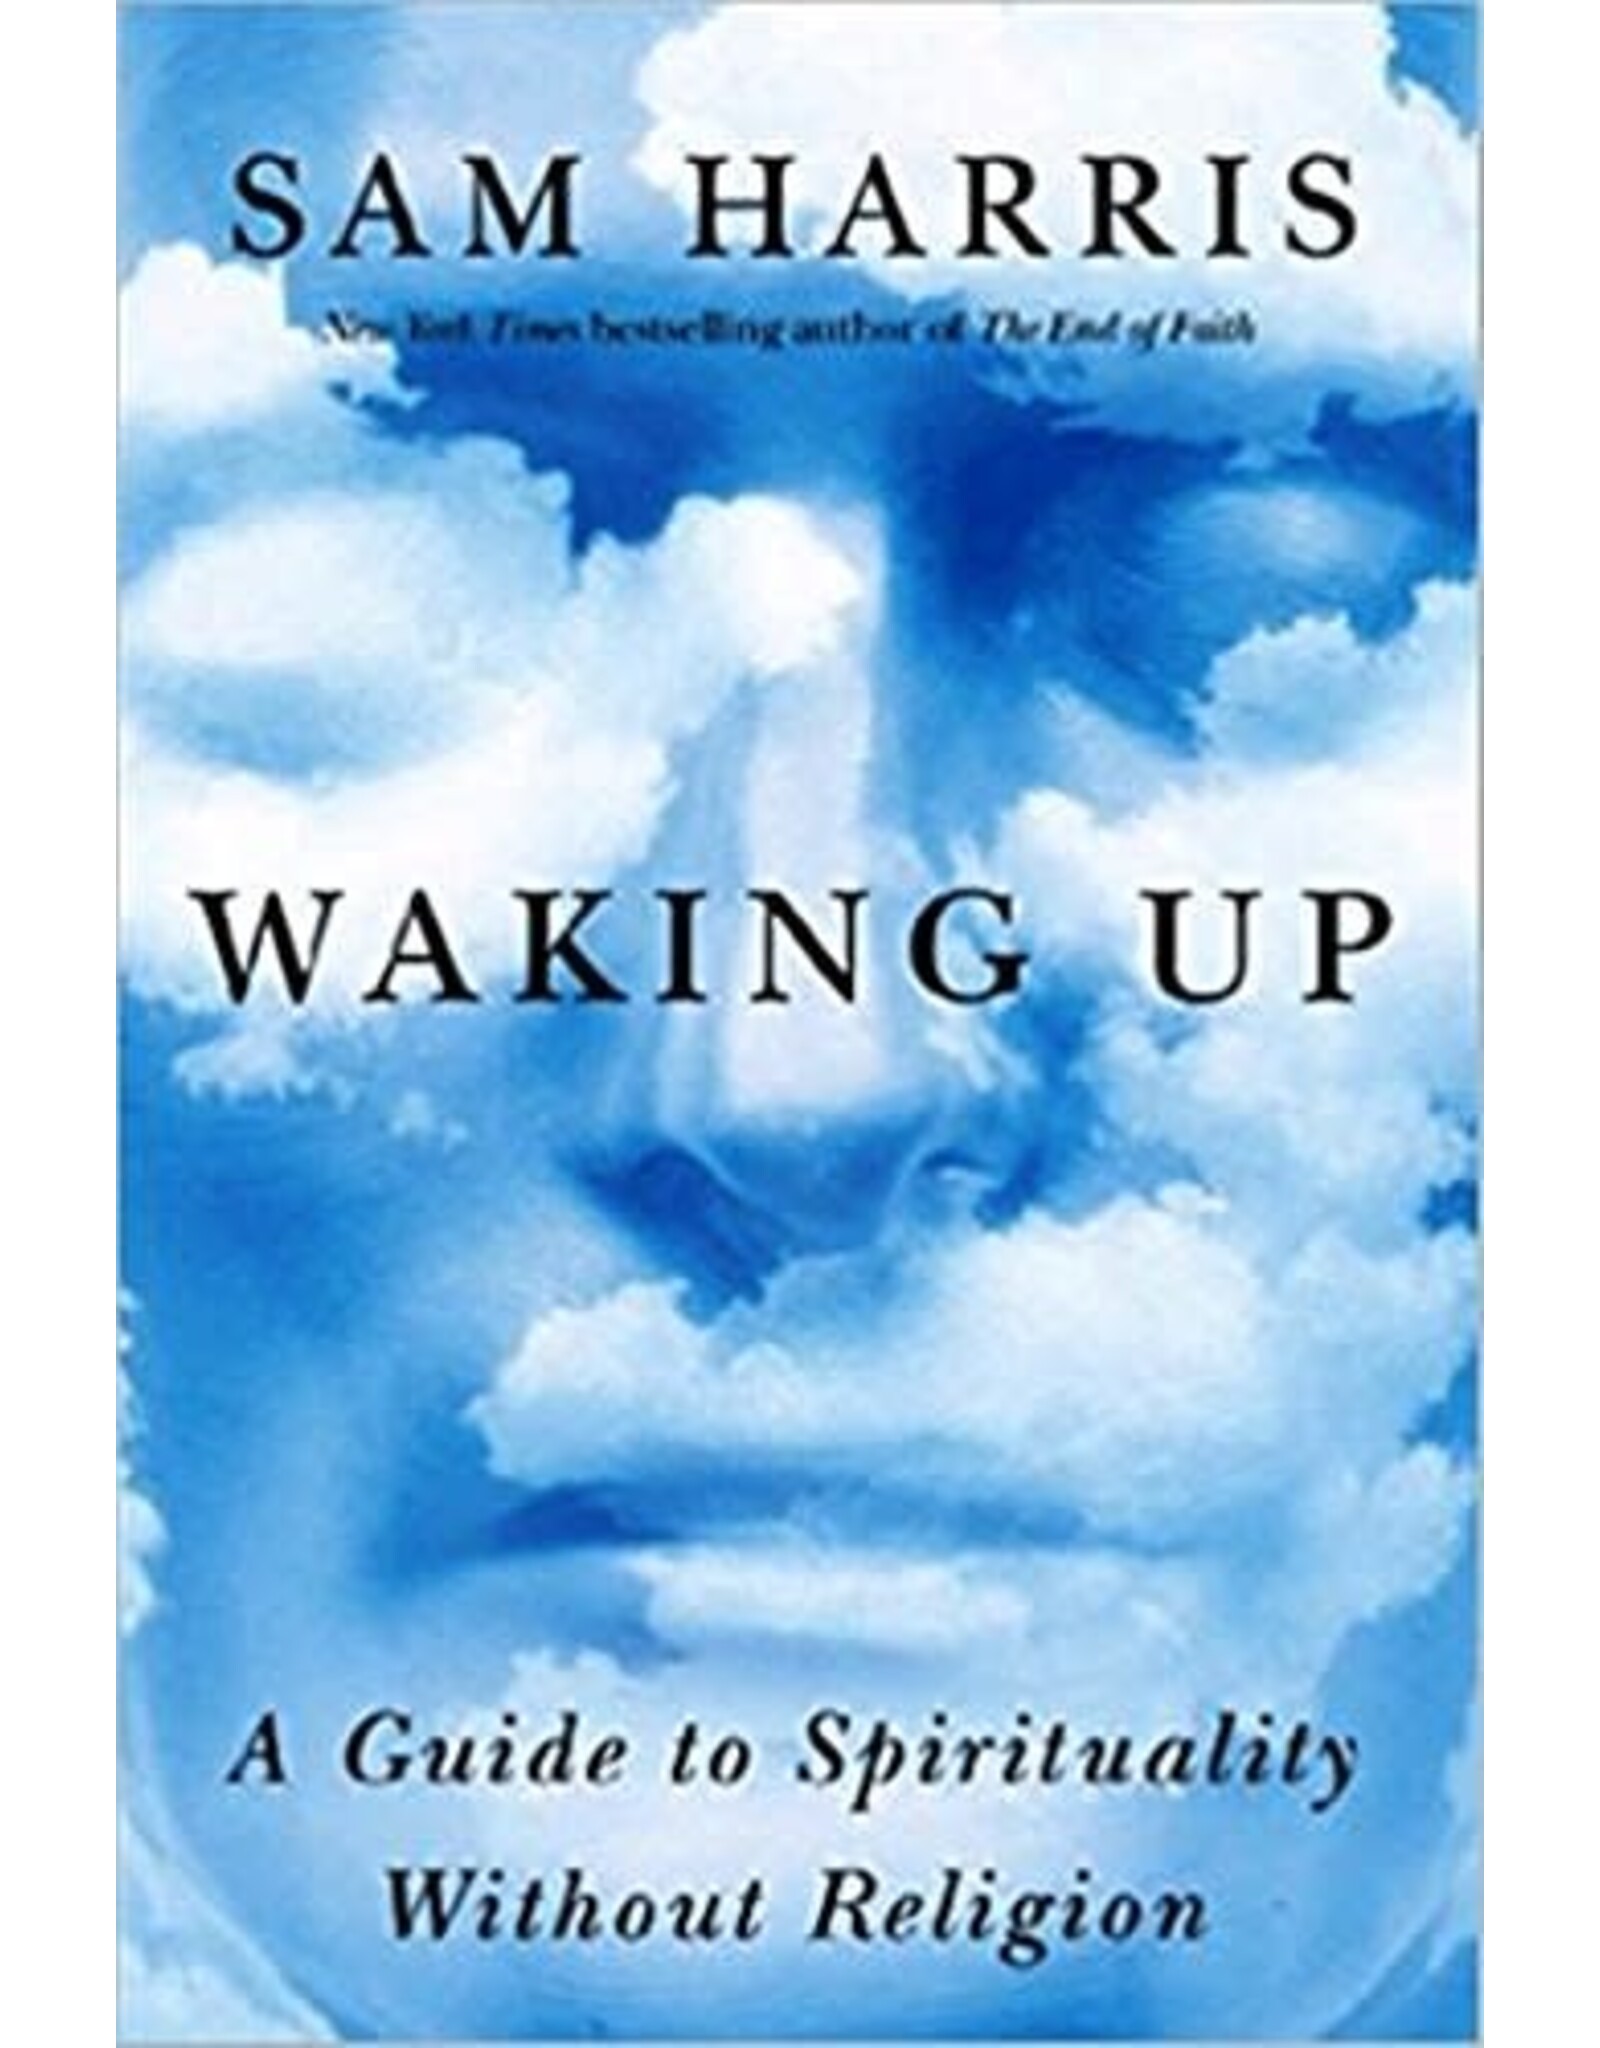 Waking Up with Sam Harris